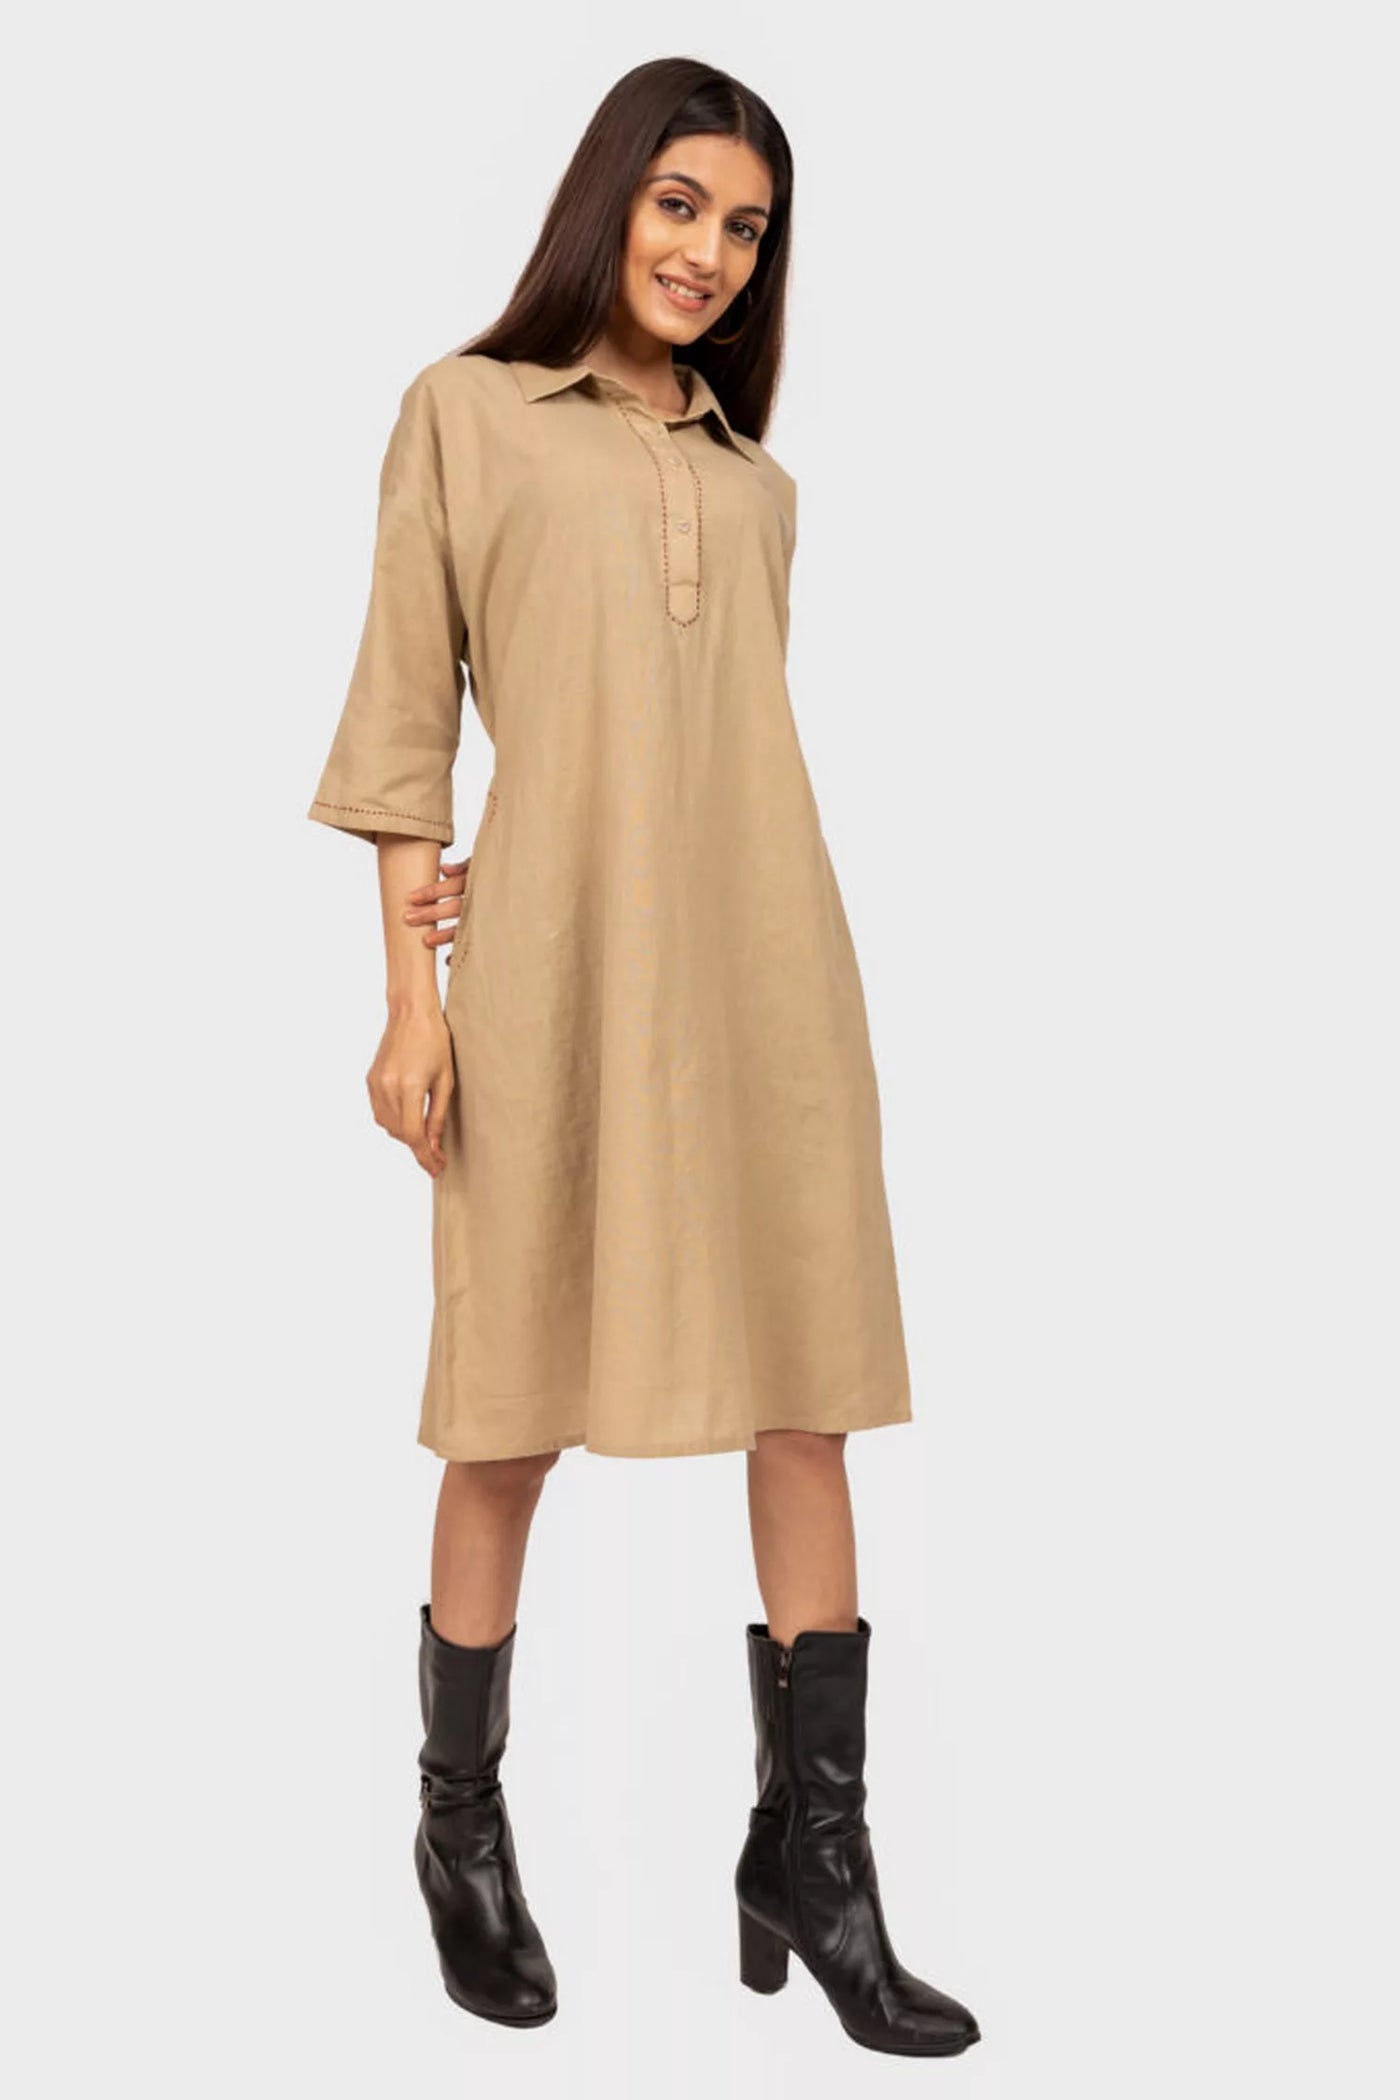 Khaki knee length cotton dress